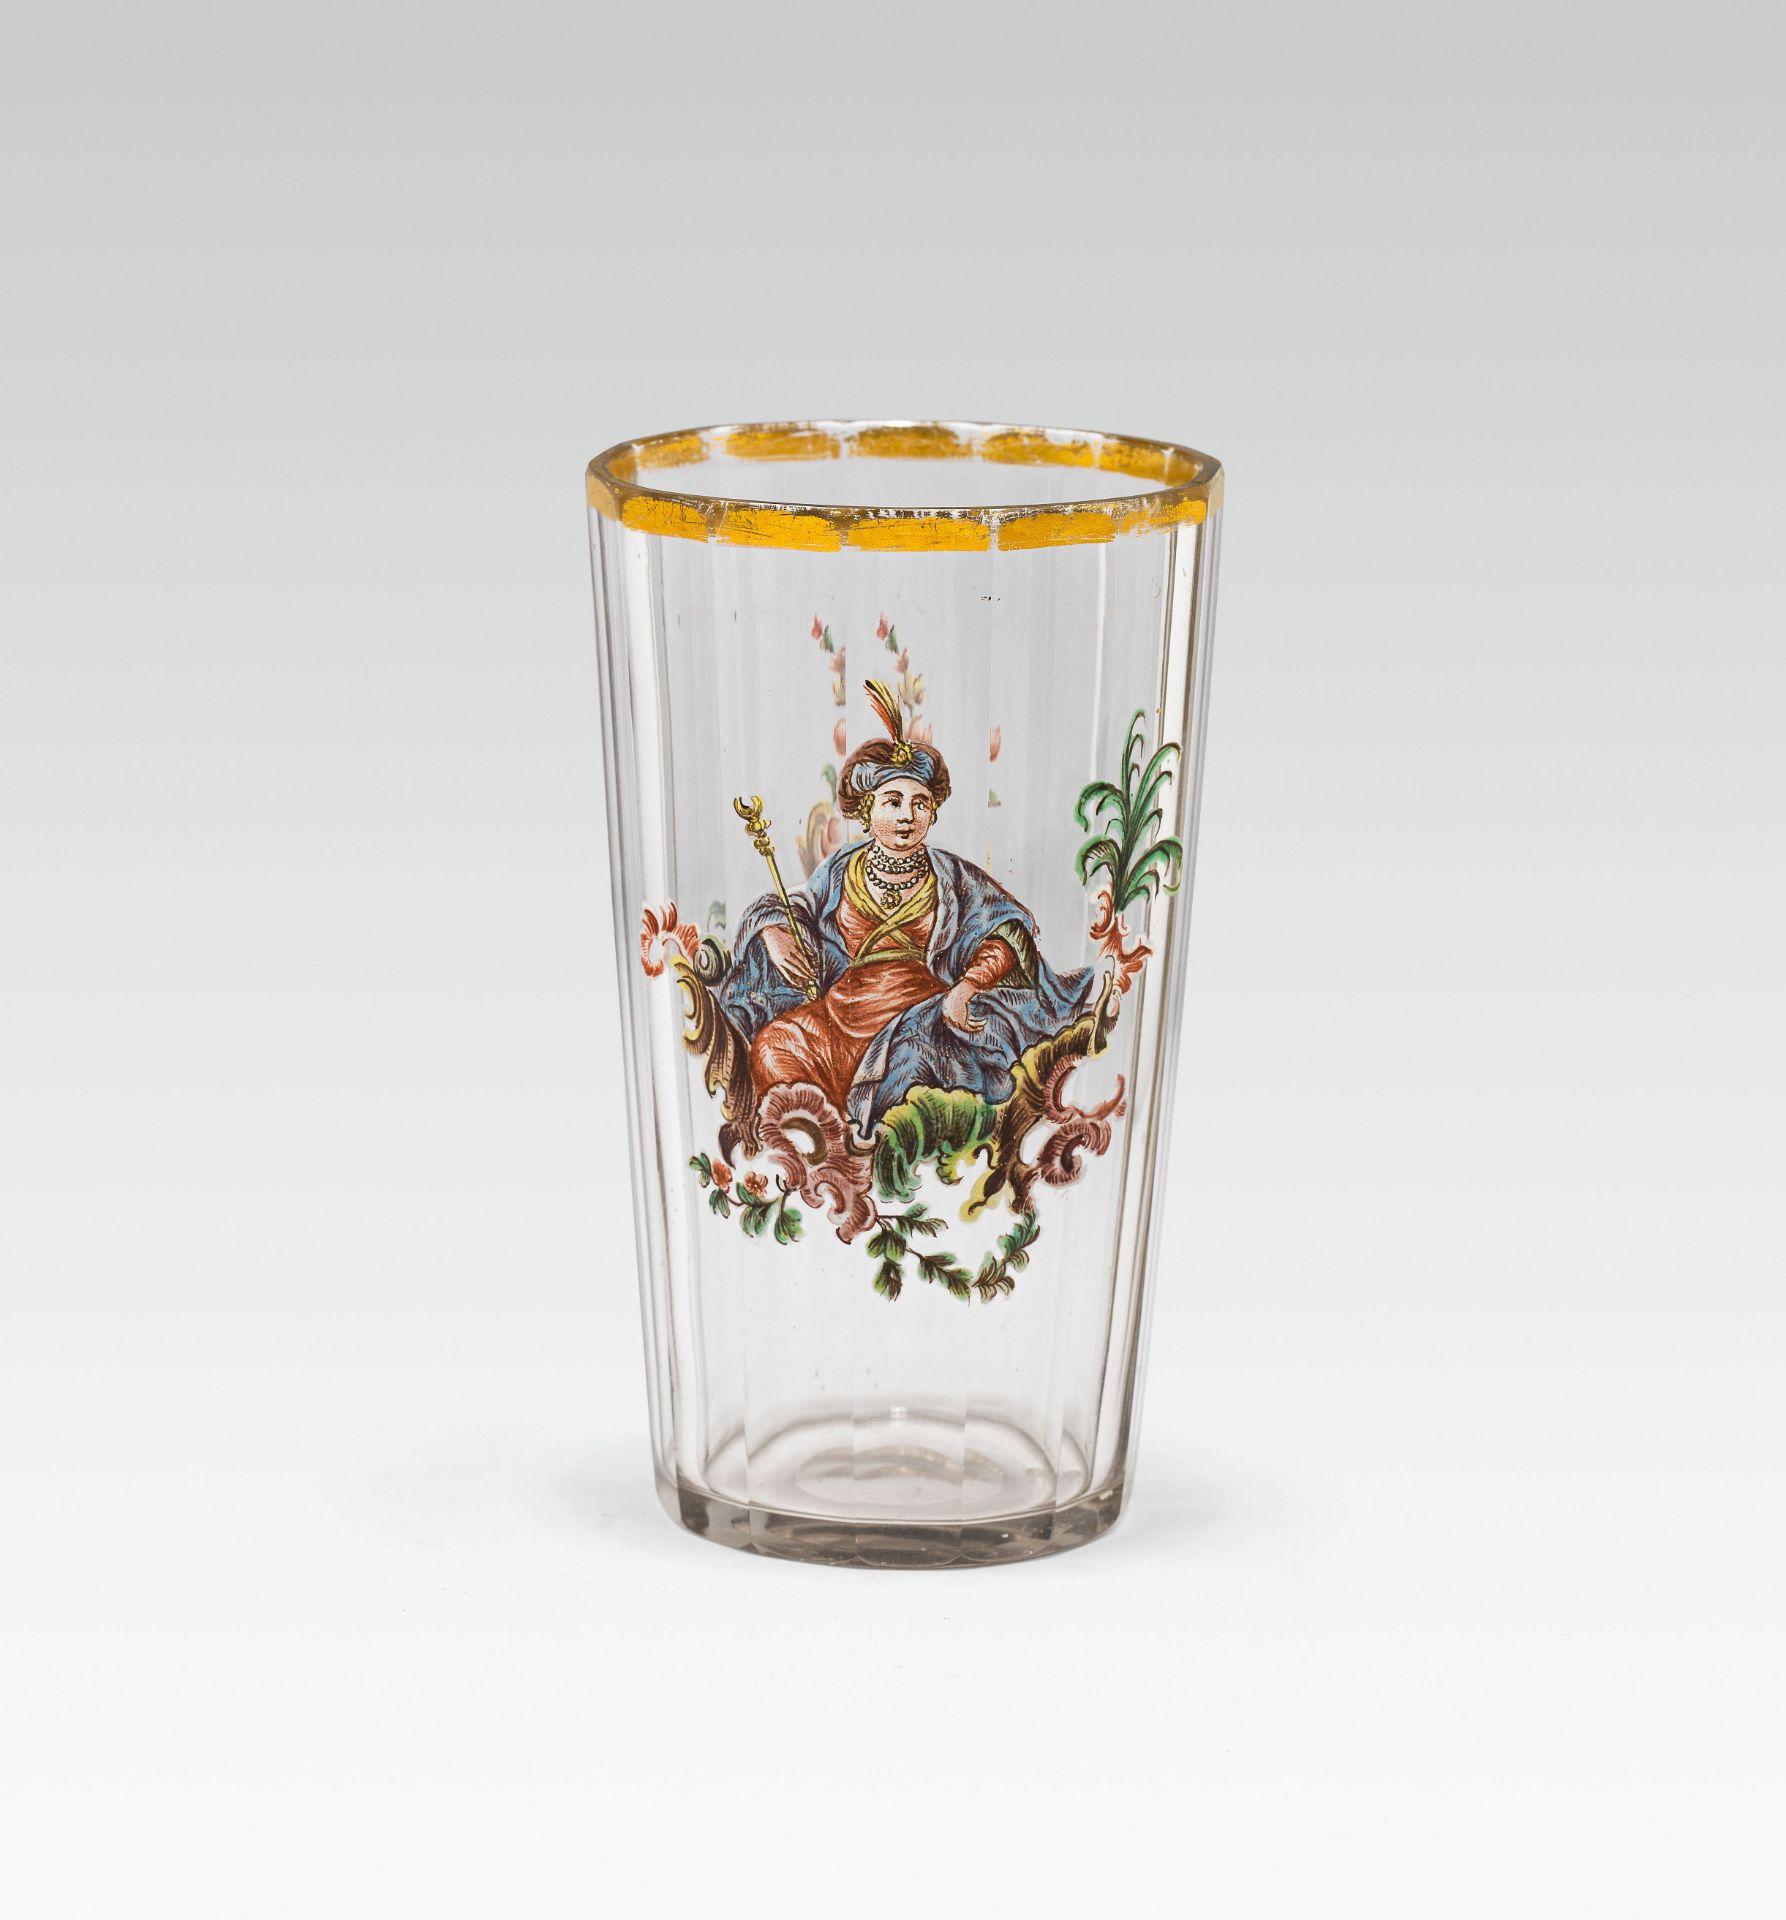 Beakercolourless glass, polished, enamel colourh. 12.6 cm